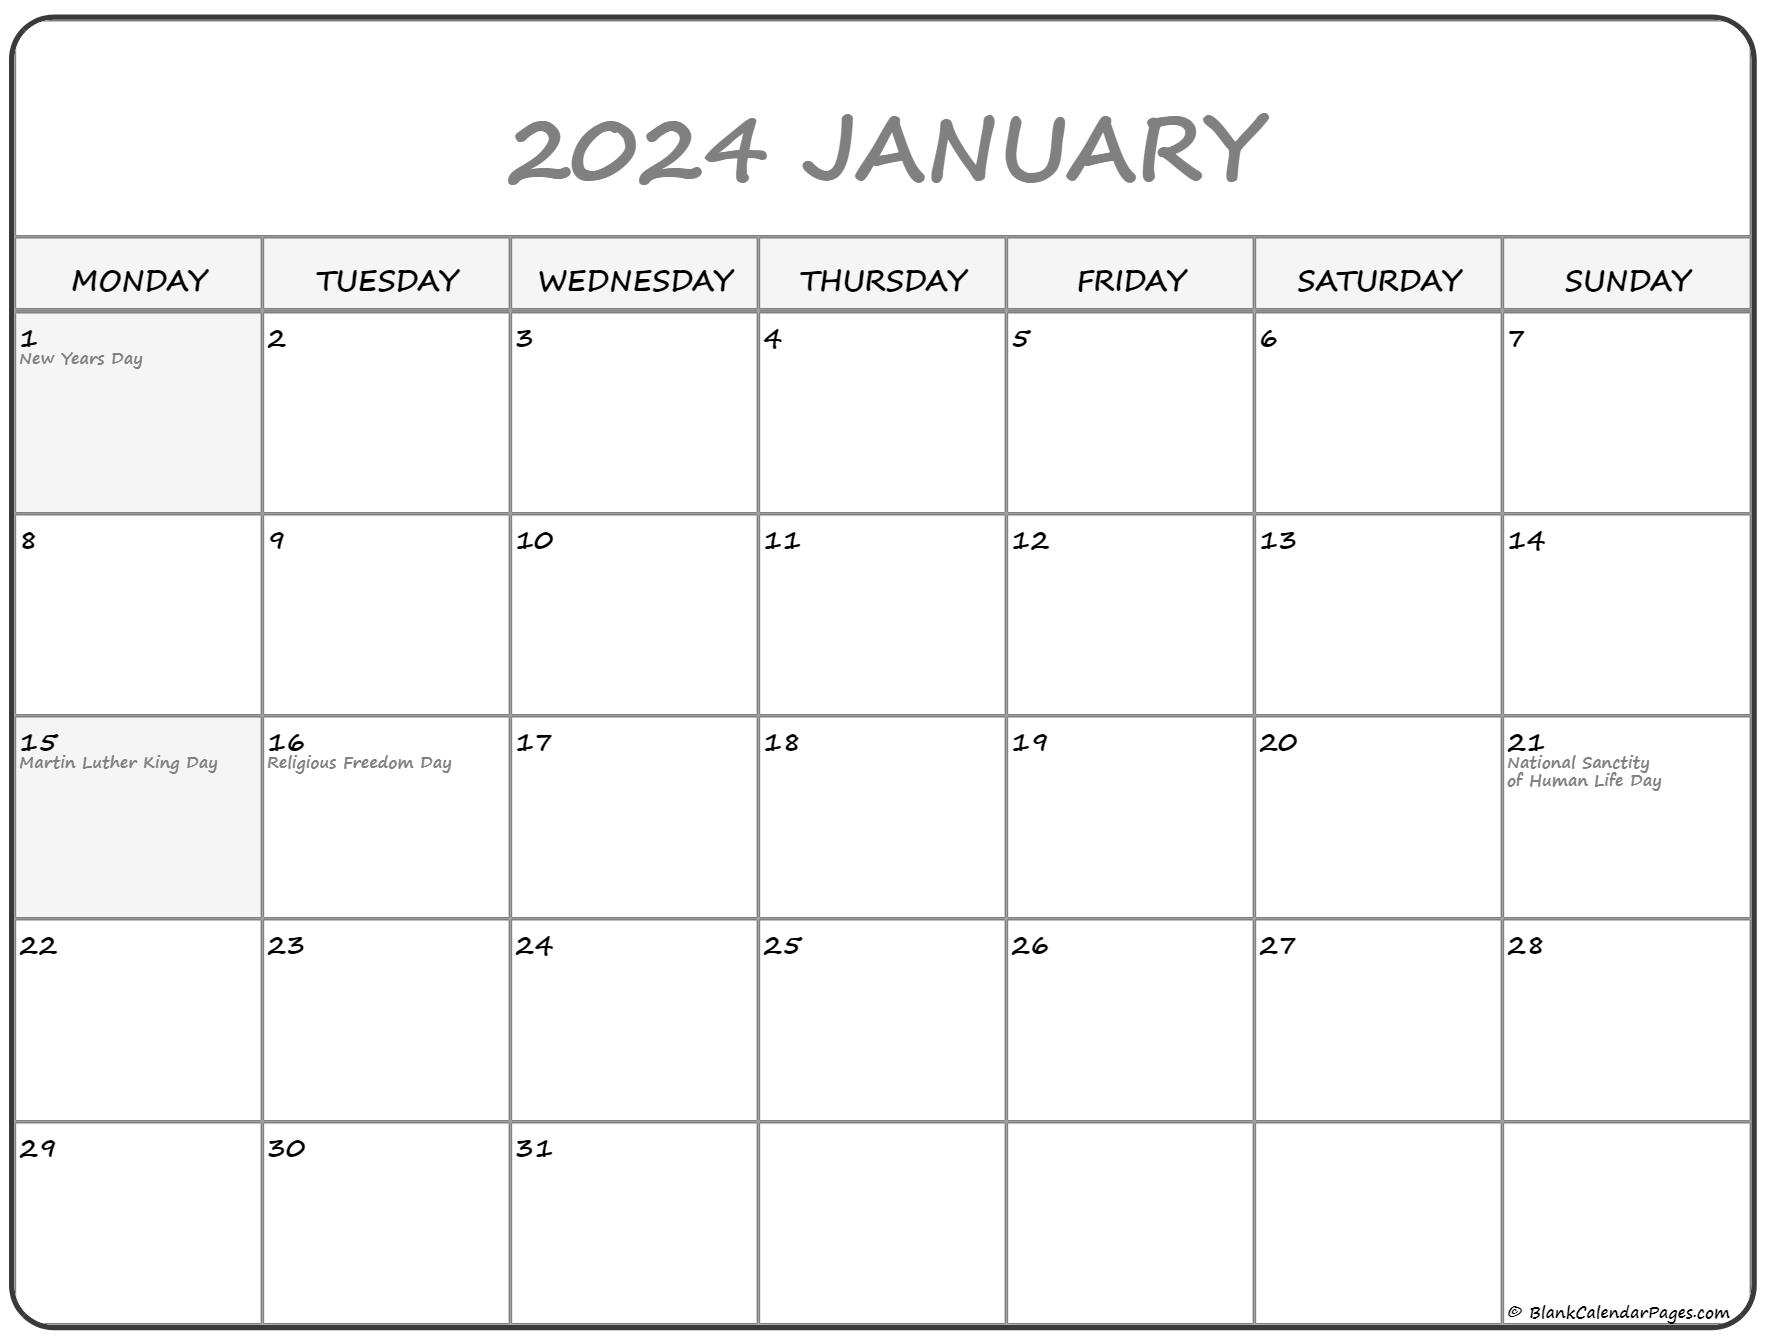 January 2024 Monday Calendar | Monday To Sunday for Free Printable Calendar 2024 Starting With Monday